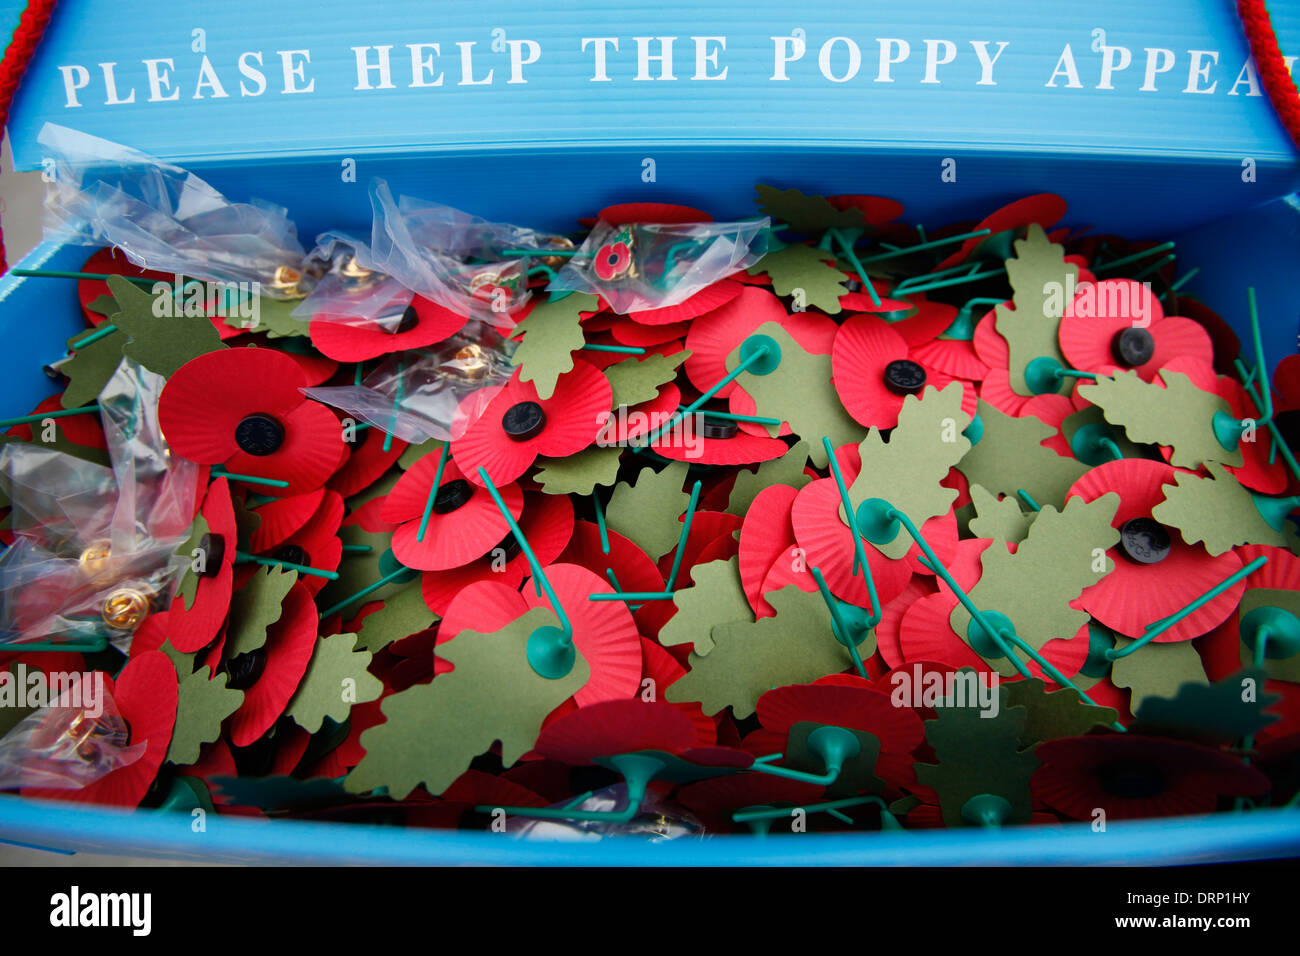 Poppy Appeal Stock Photo